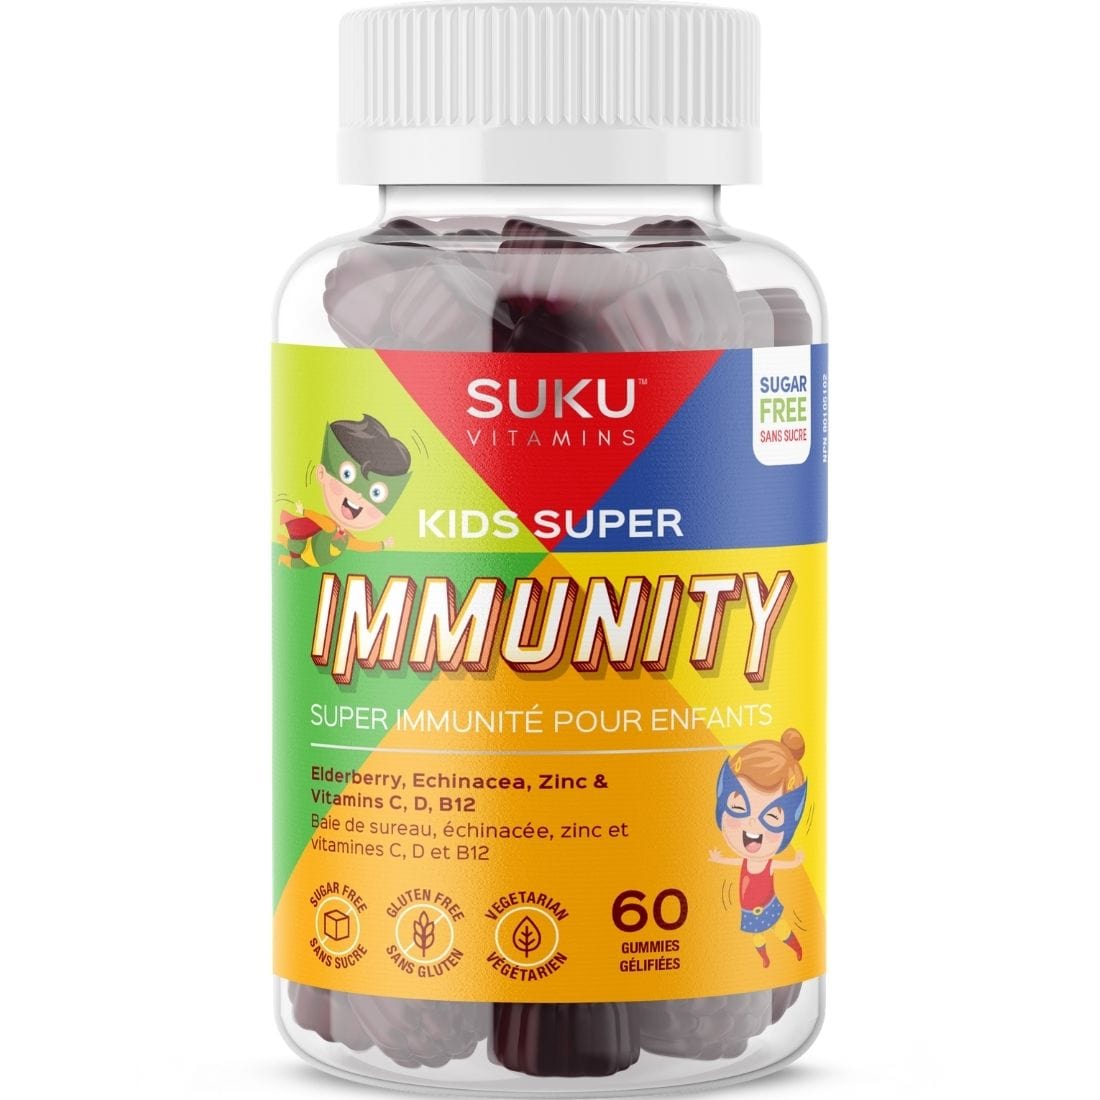 SUKU Vitamins Kids Super Immunity, 60 Gummies